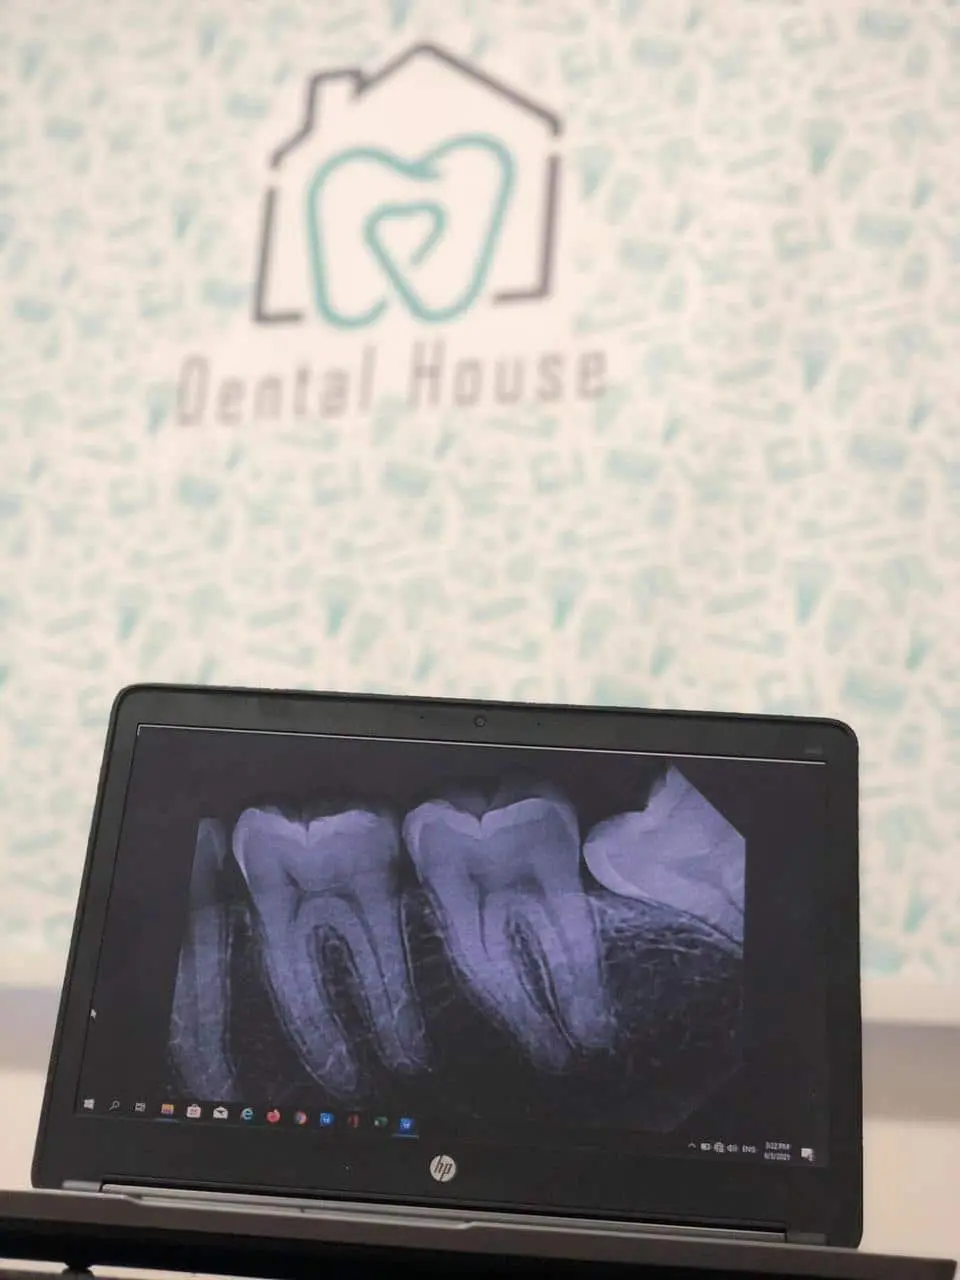 مركز Dental House لعلاج الأسنان